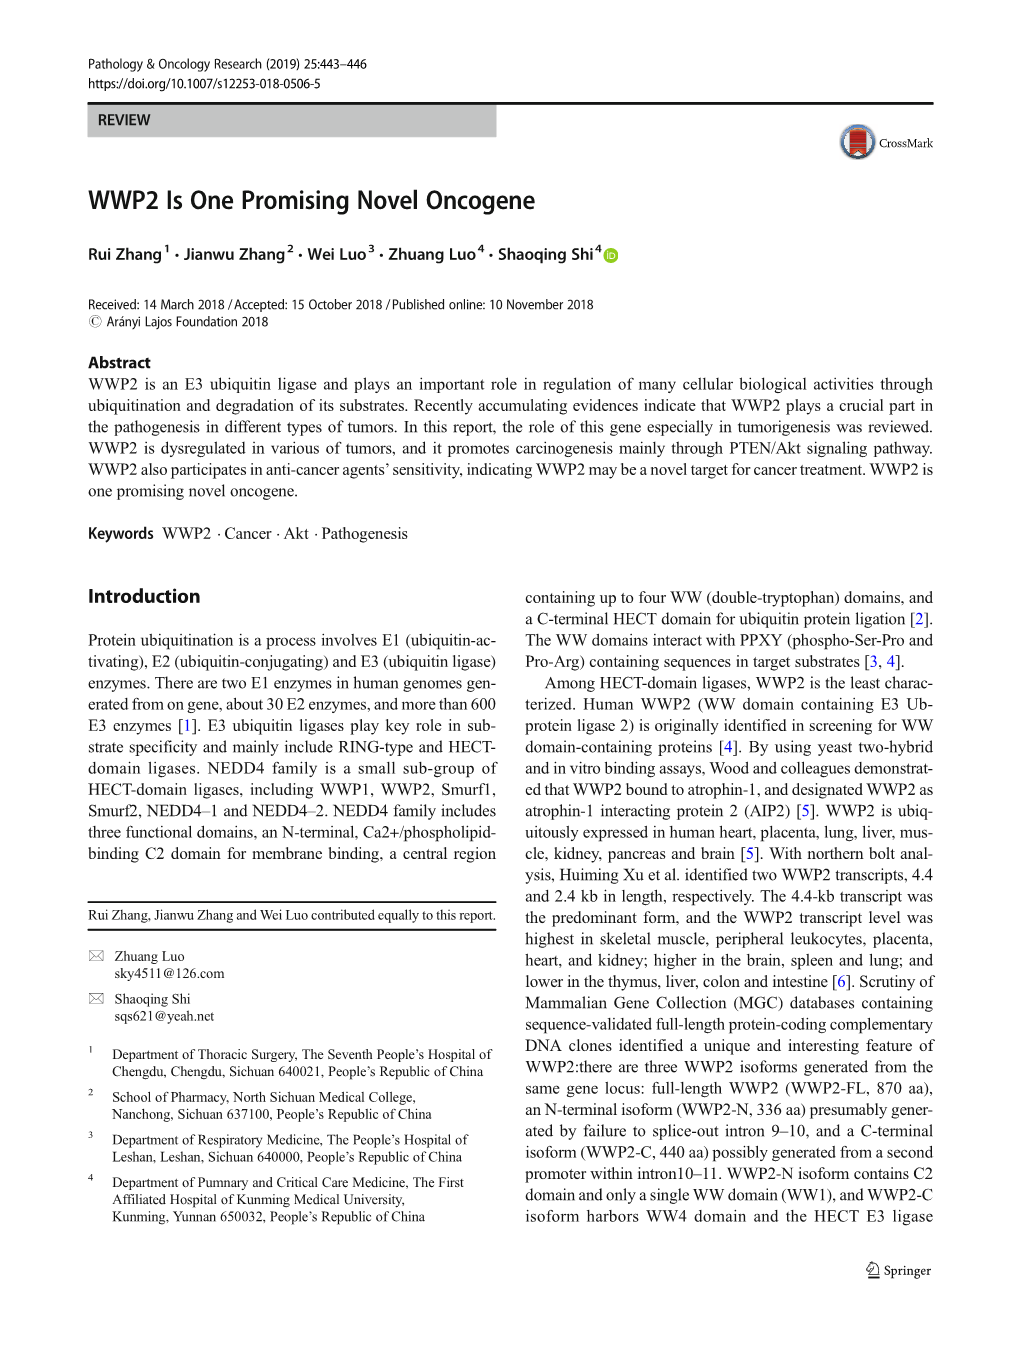 WWP2 Is One Promising Novel Oncogene